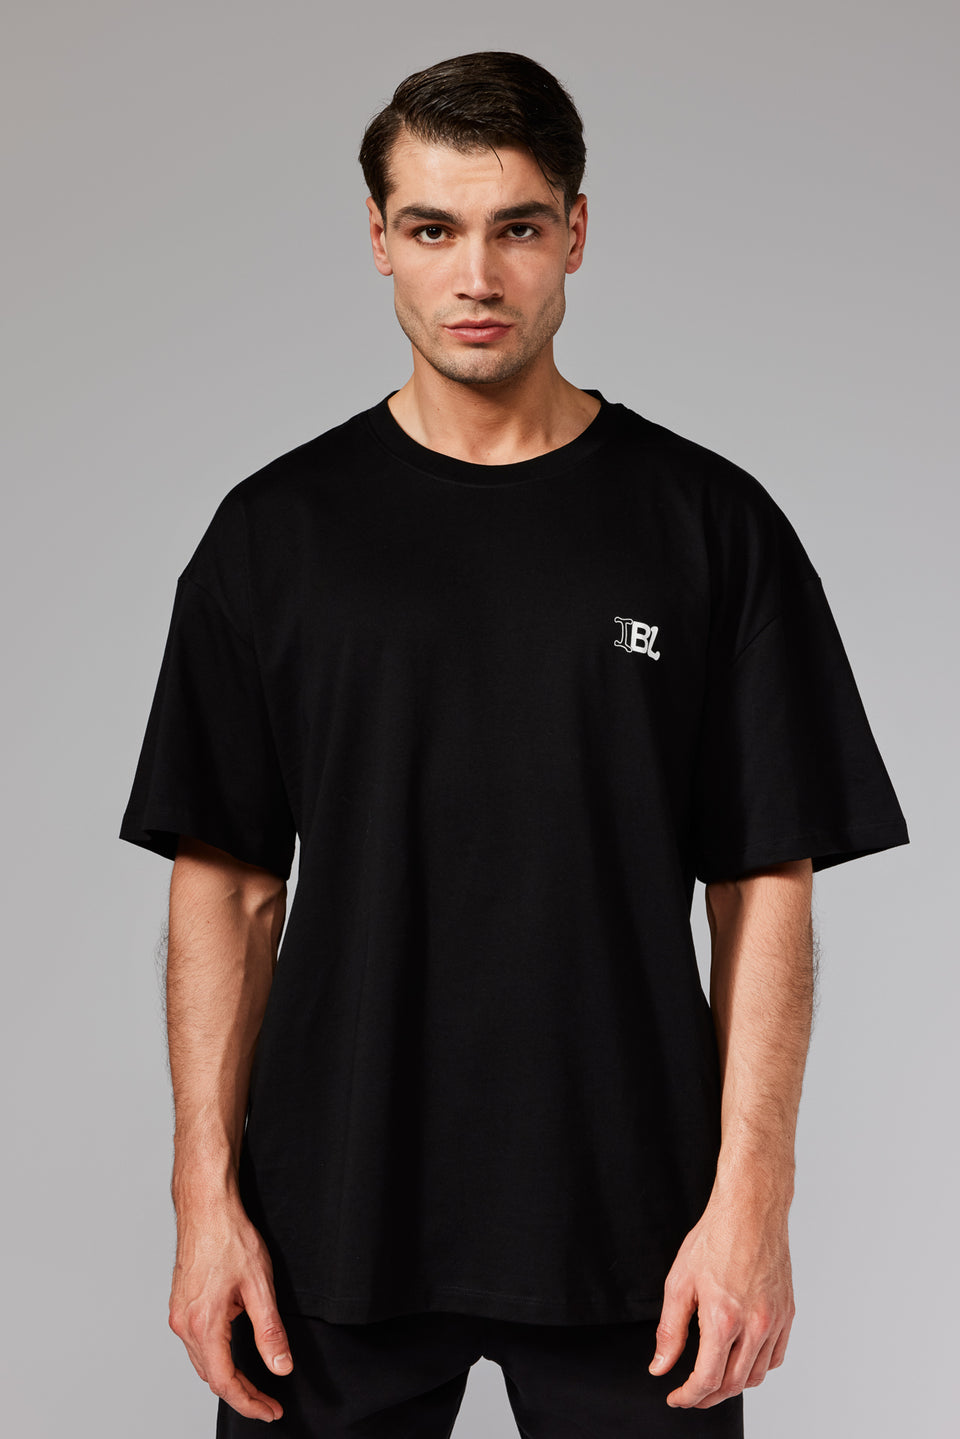 IBL Wavy T-shirt - Black